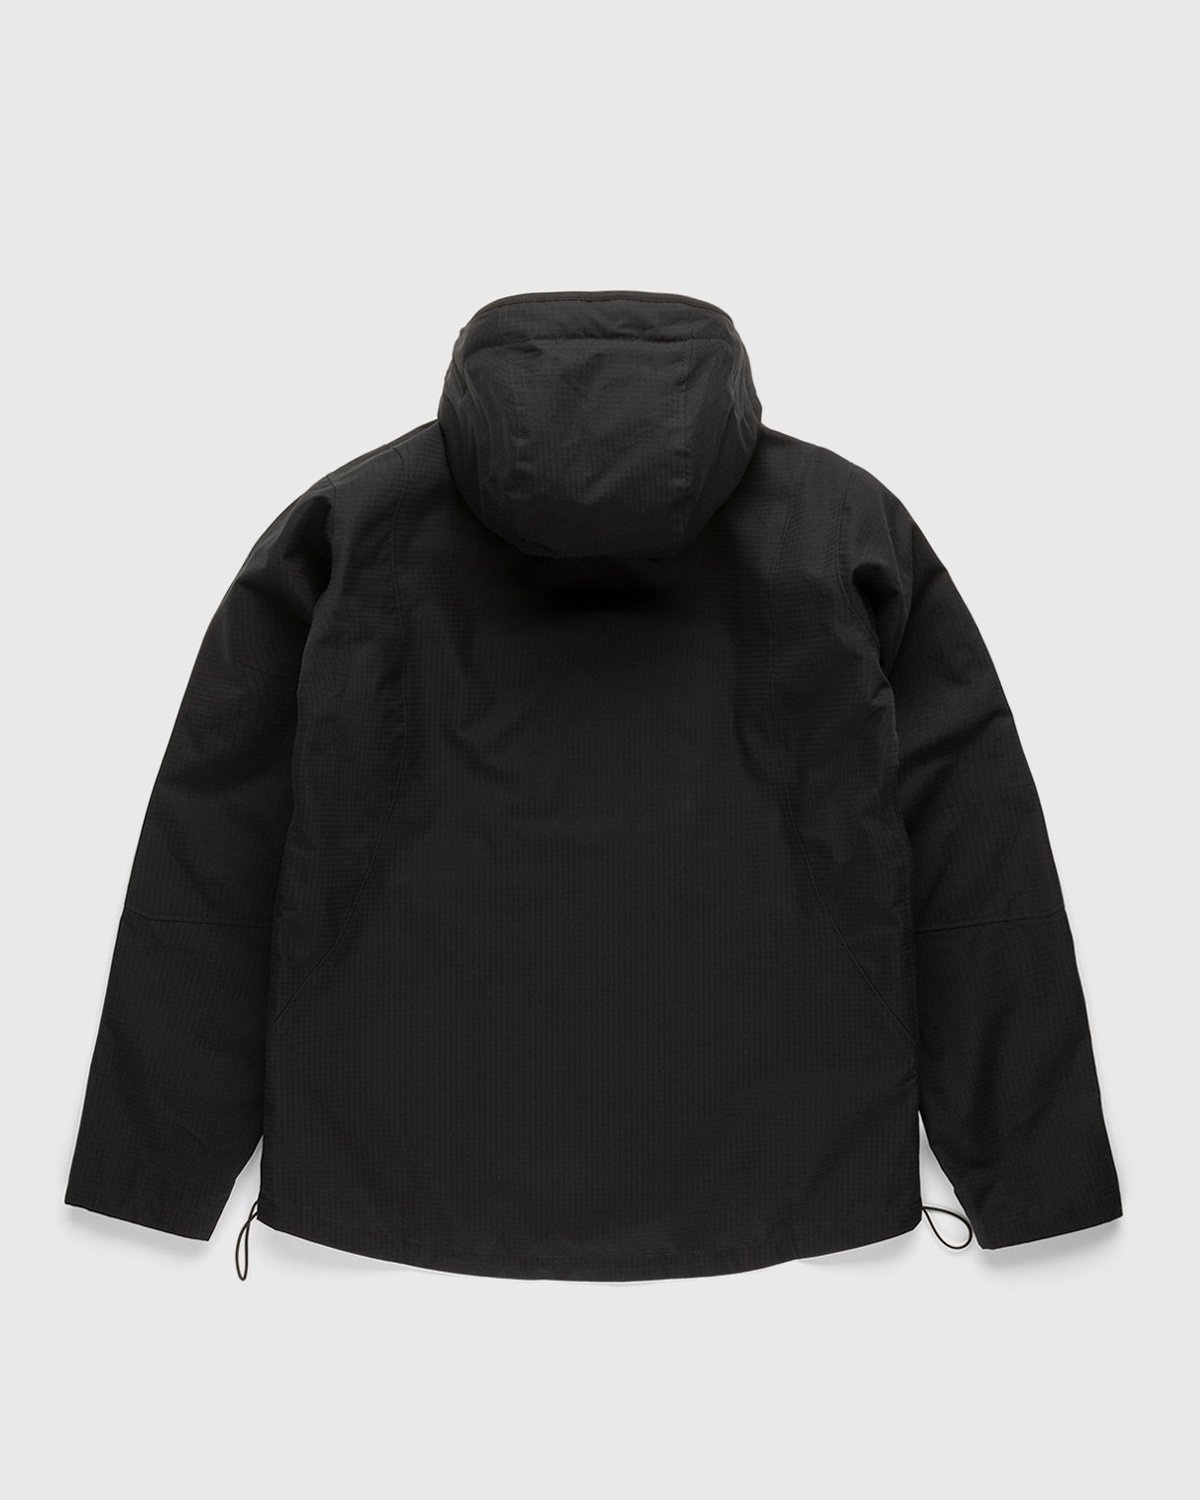 Arnar Mar Jonsson – Ventile Cross Pocket Outerwear Jacket Lava Beige - Outerwear - Brown - Image 2